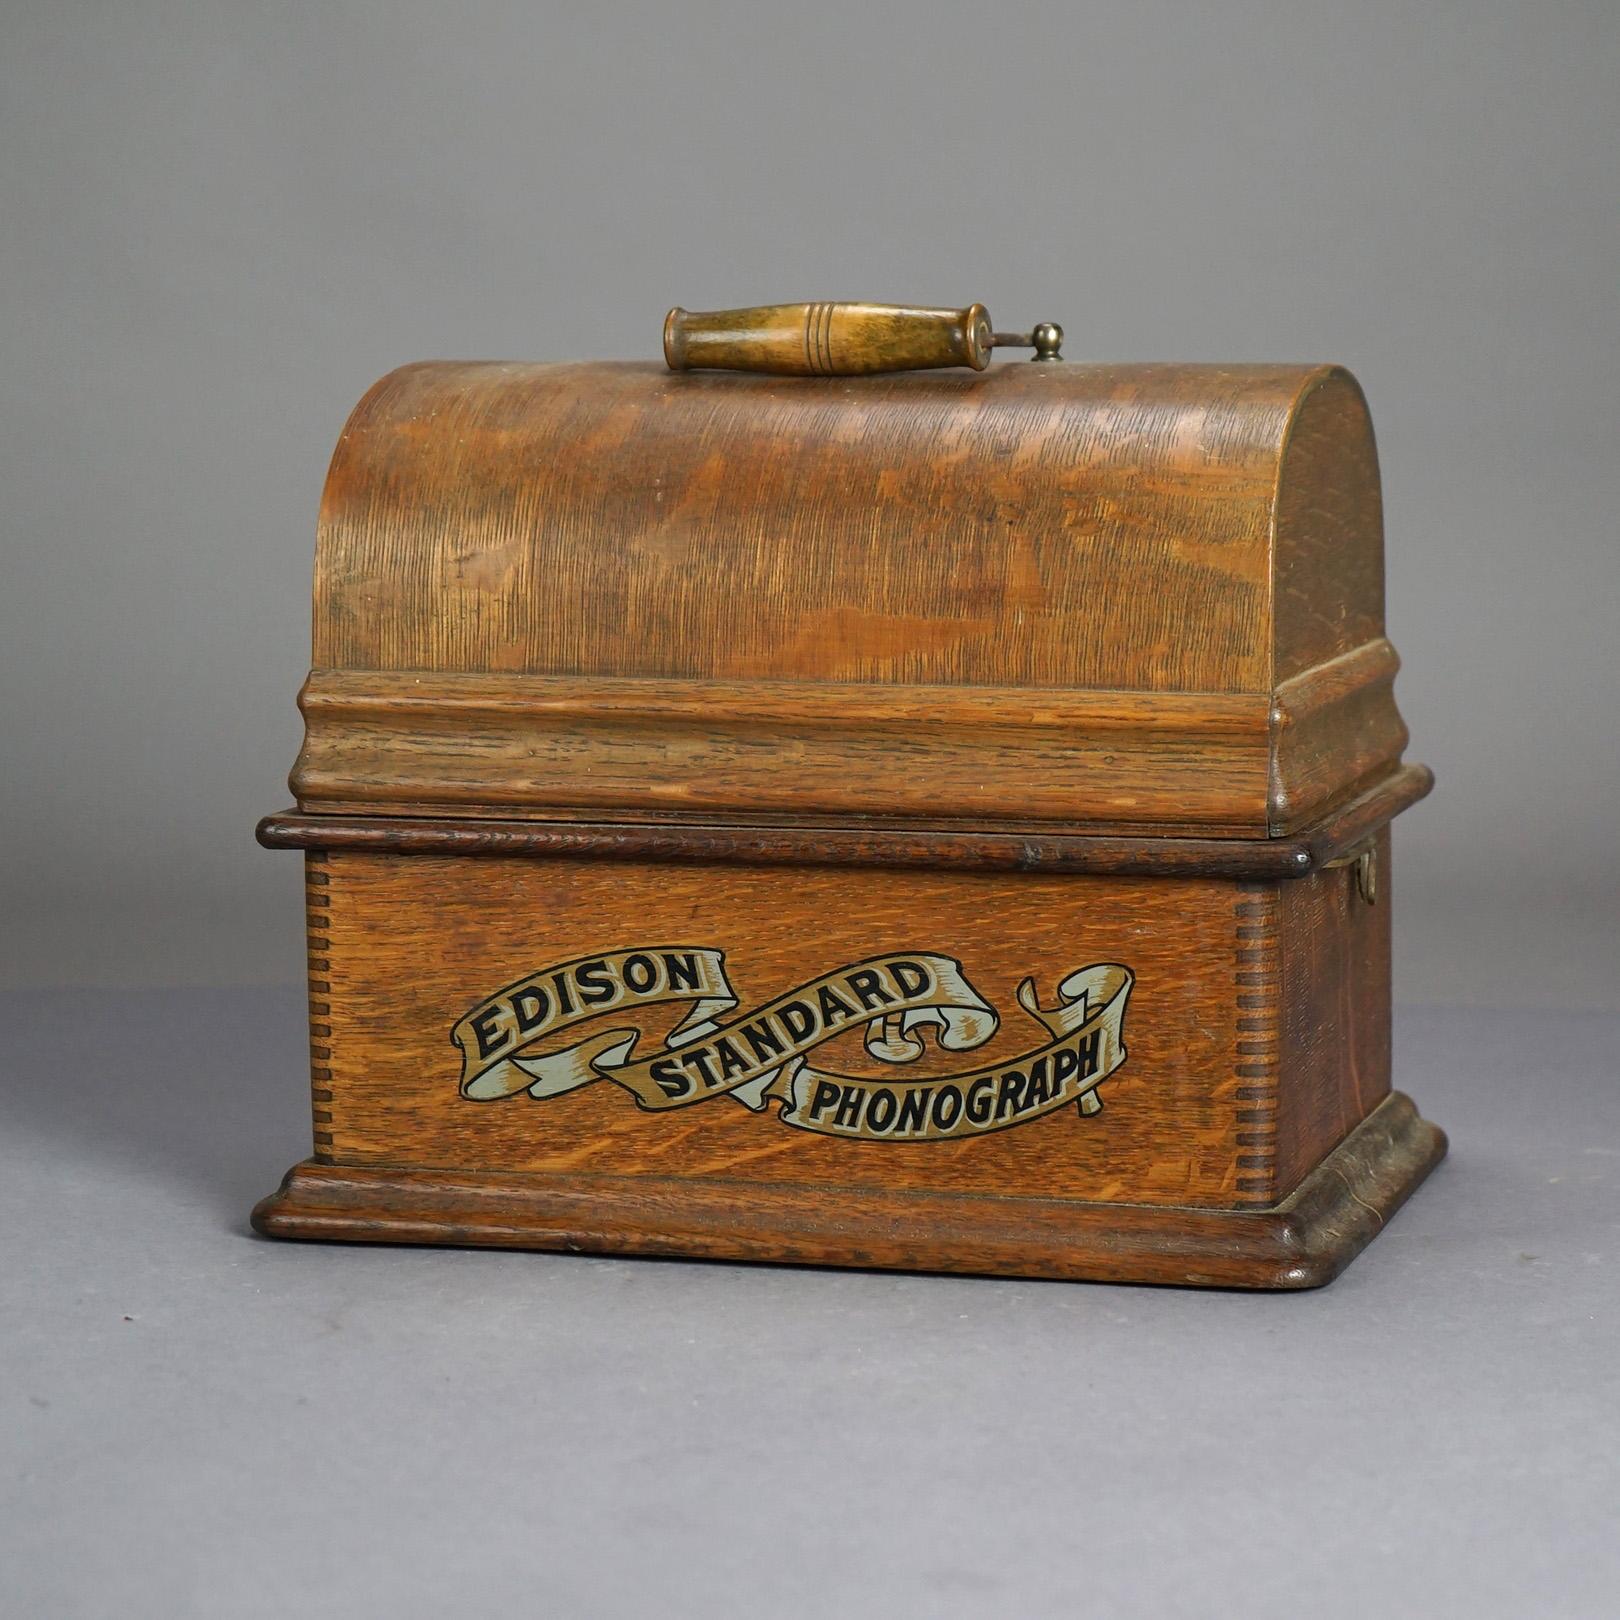 Antique Edison Standard Cylinder Oak Phonograph Circa 1920

Measures - 10.25